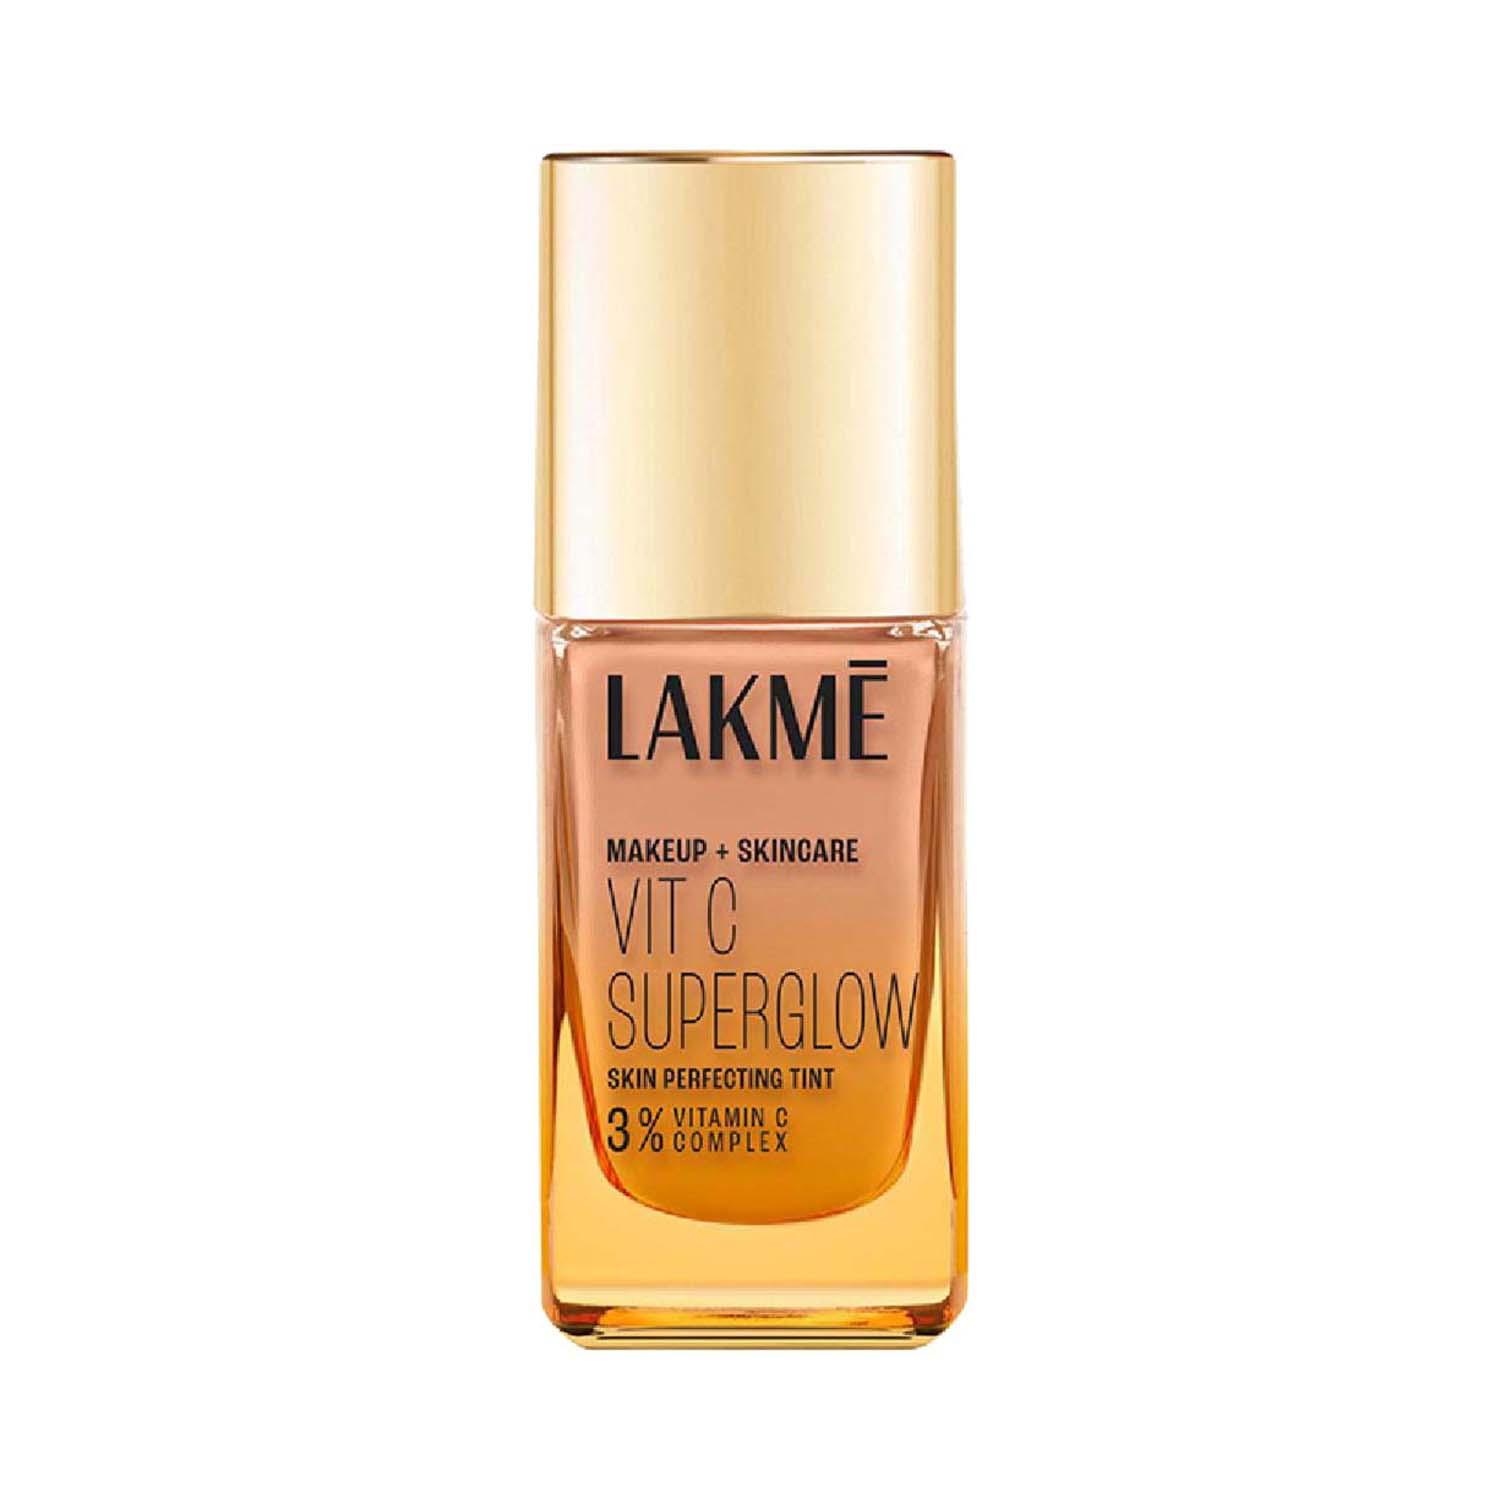 Lakme | Lakme Makeup+Skincare Vit C Superglow Skin Perfecting Tint - Cool Rose C140 (25 ml)